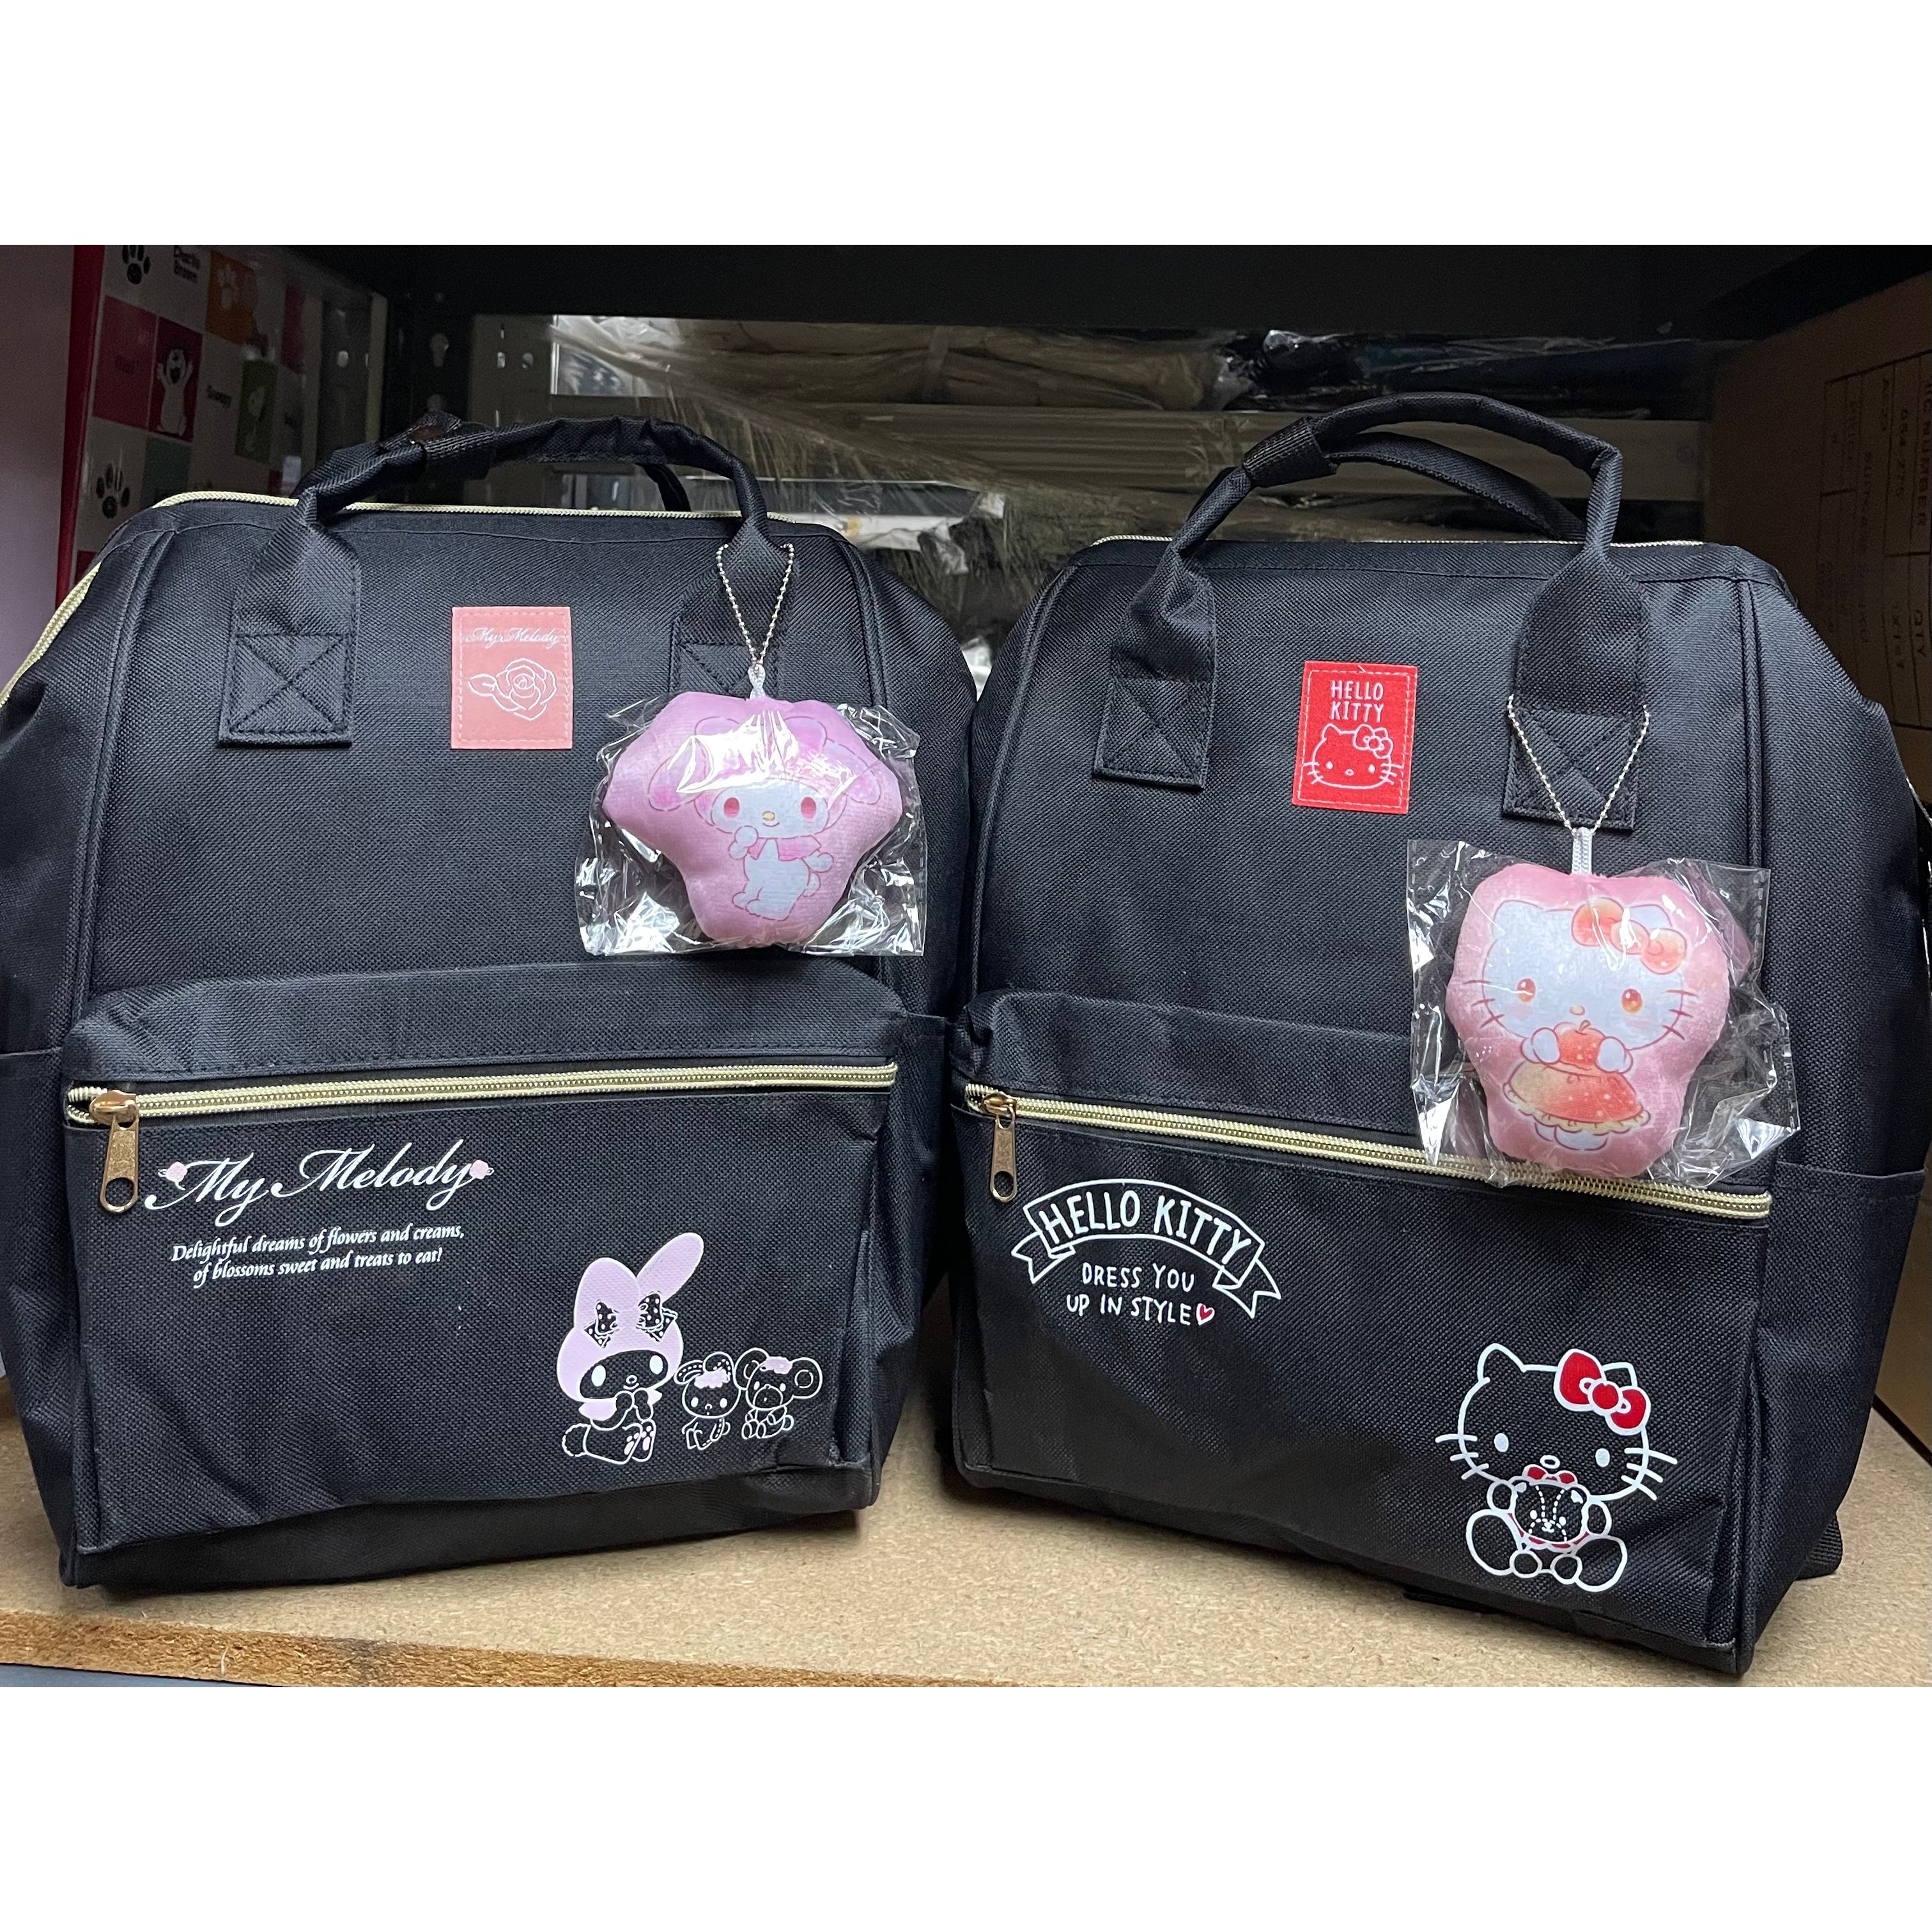 🎌日本直送🎌 Sanrio 7件套裝限定背包福袋| Forever Gifts Shop